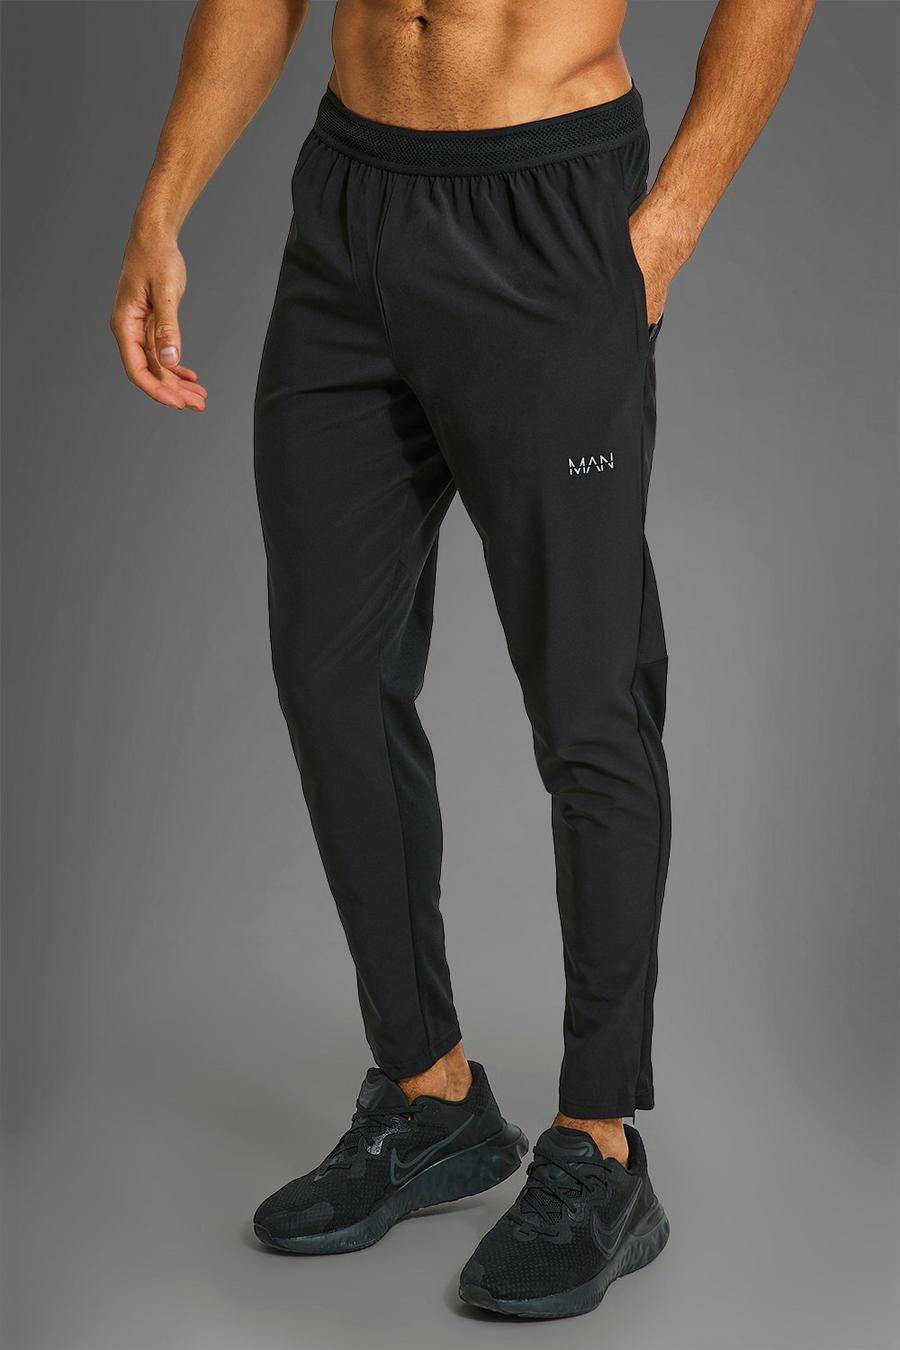 Man Active Performance Jogginghose mit Reißverschluss-Taschen, Black noir image number 1